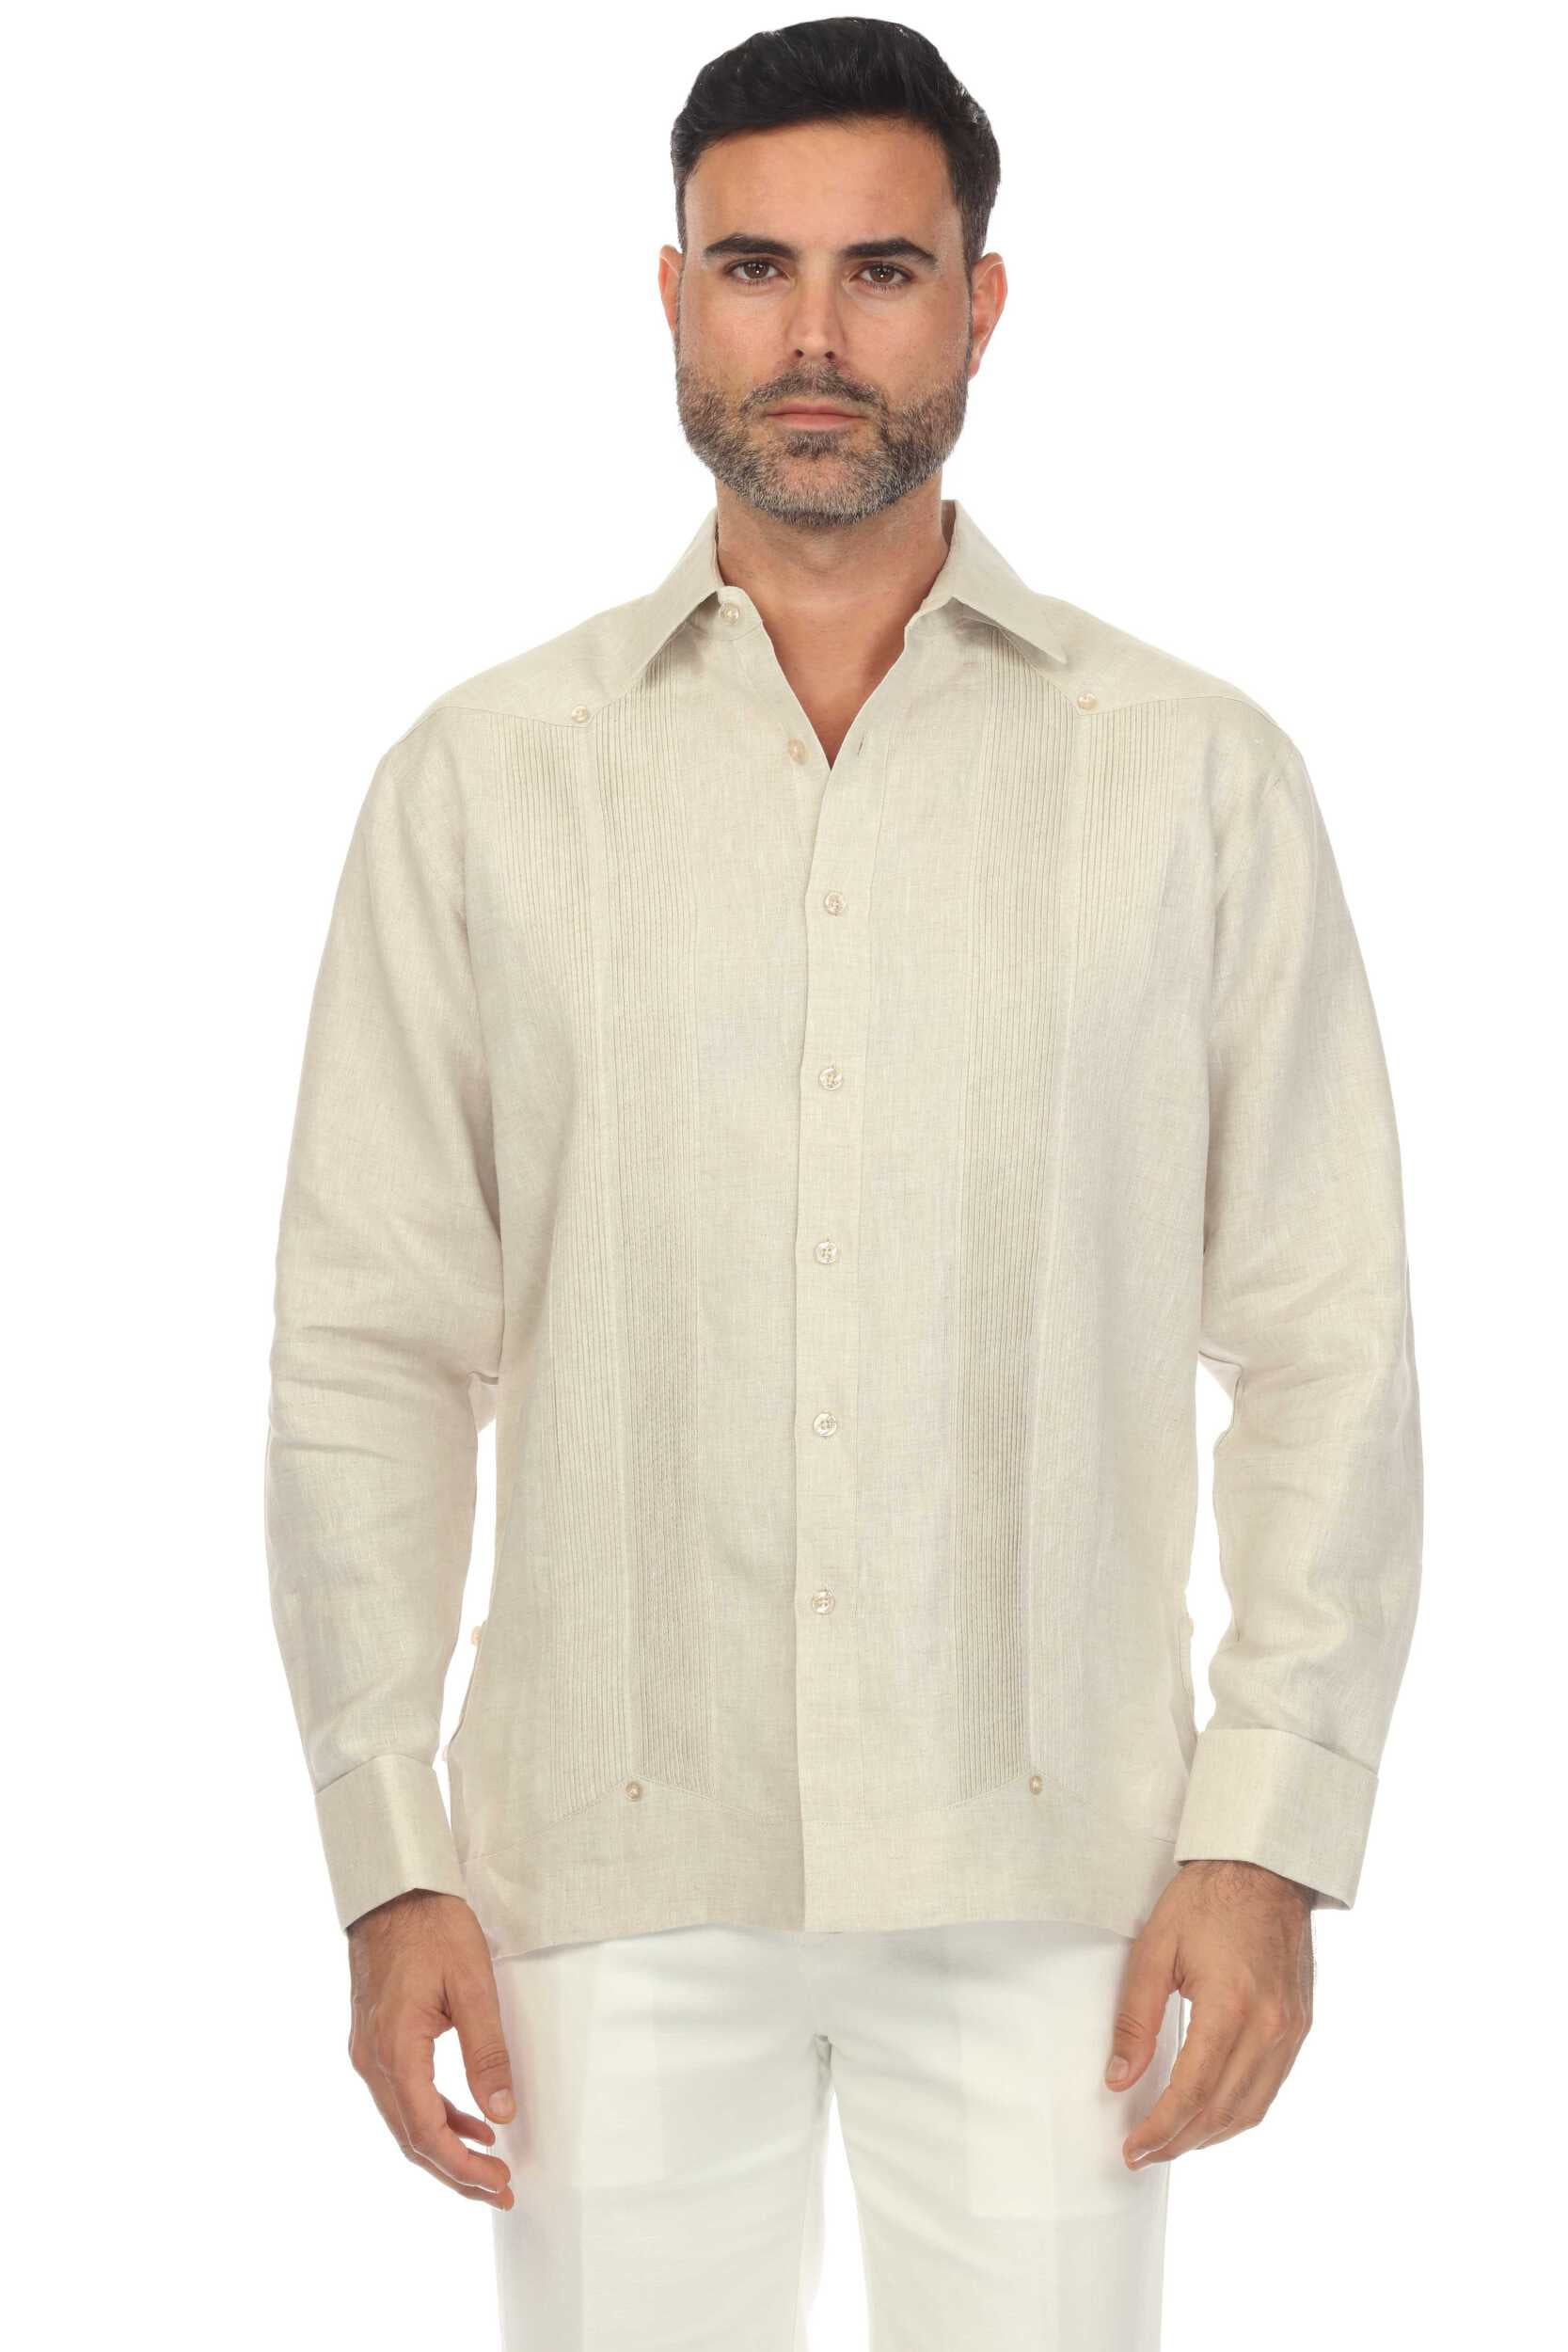 Mojito Men's 100% Linen Guayabera Chacabana Shirt Long Sleeve with ...